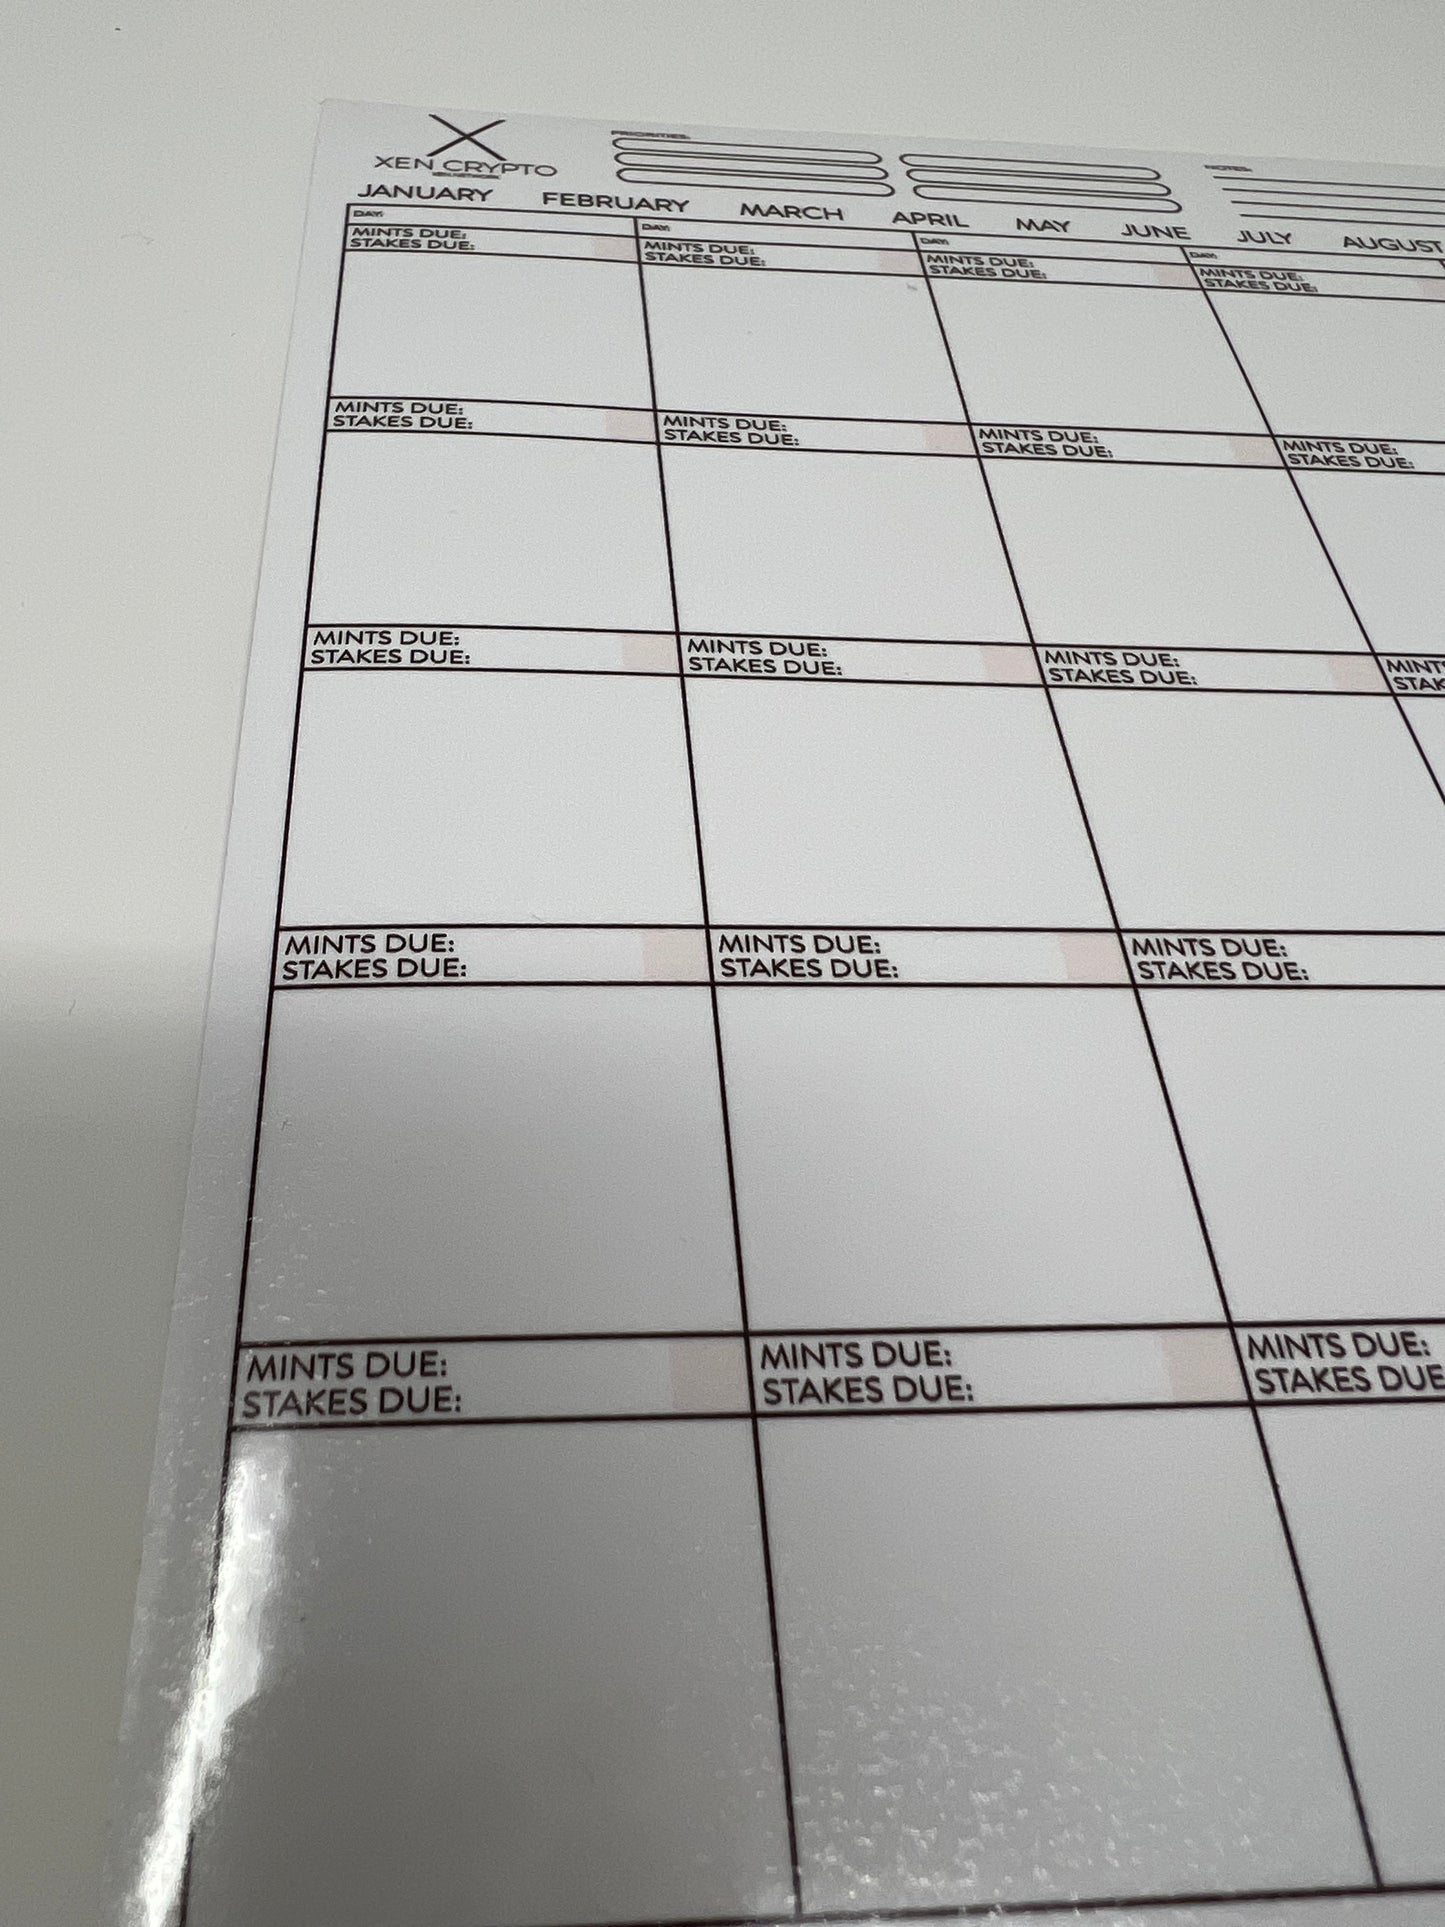 Dry-Erase Monthly Calendar